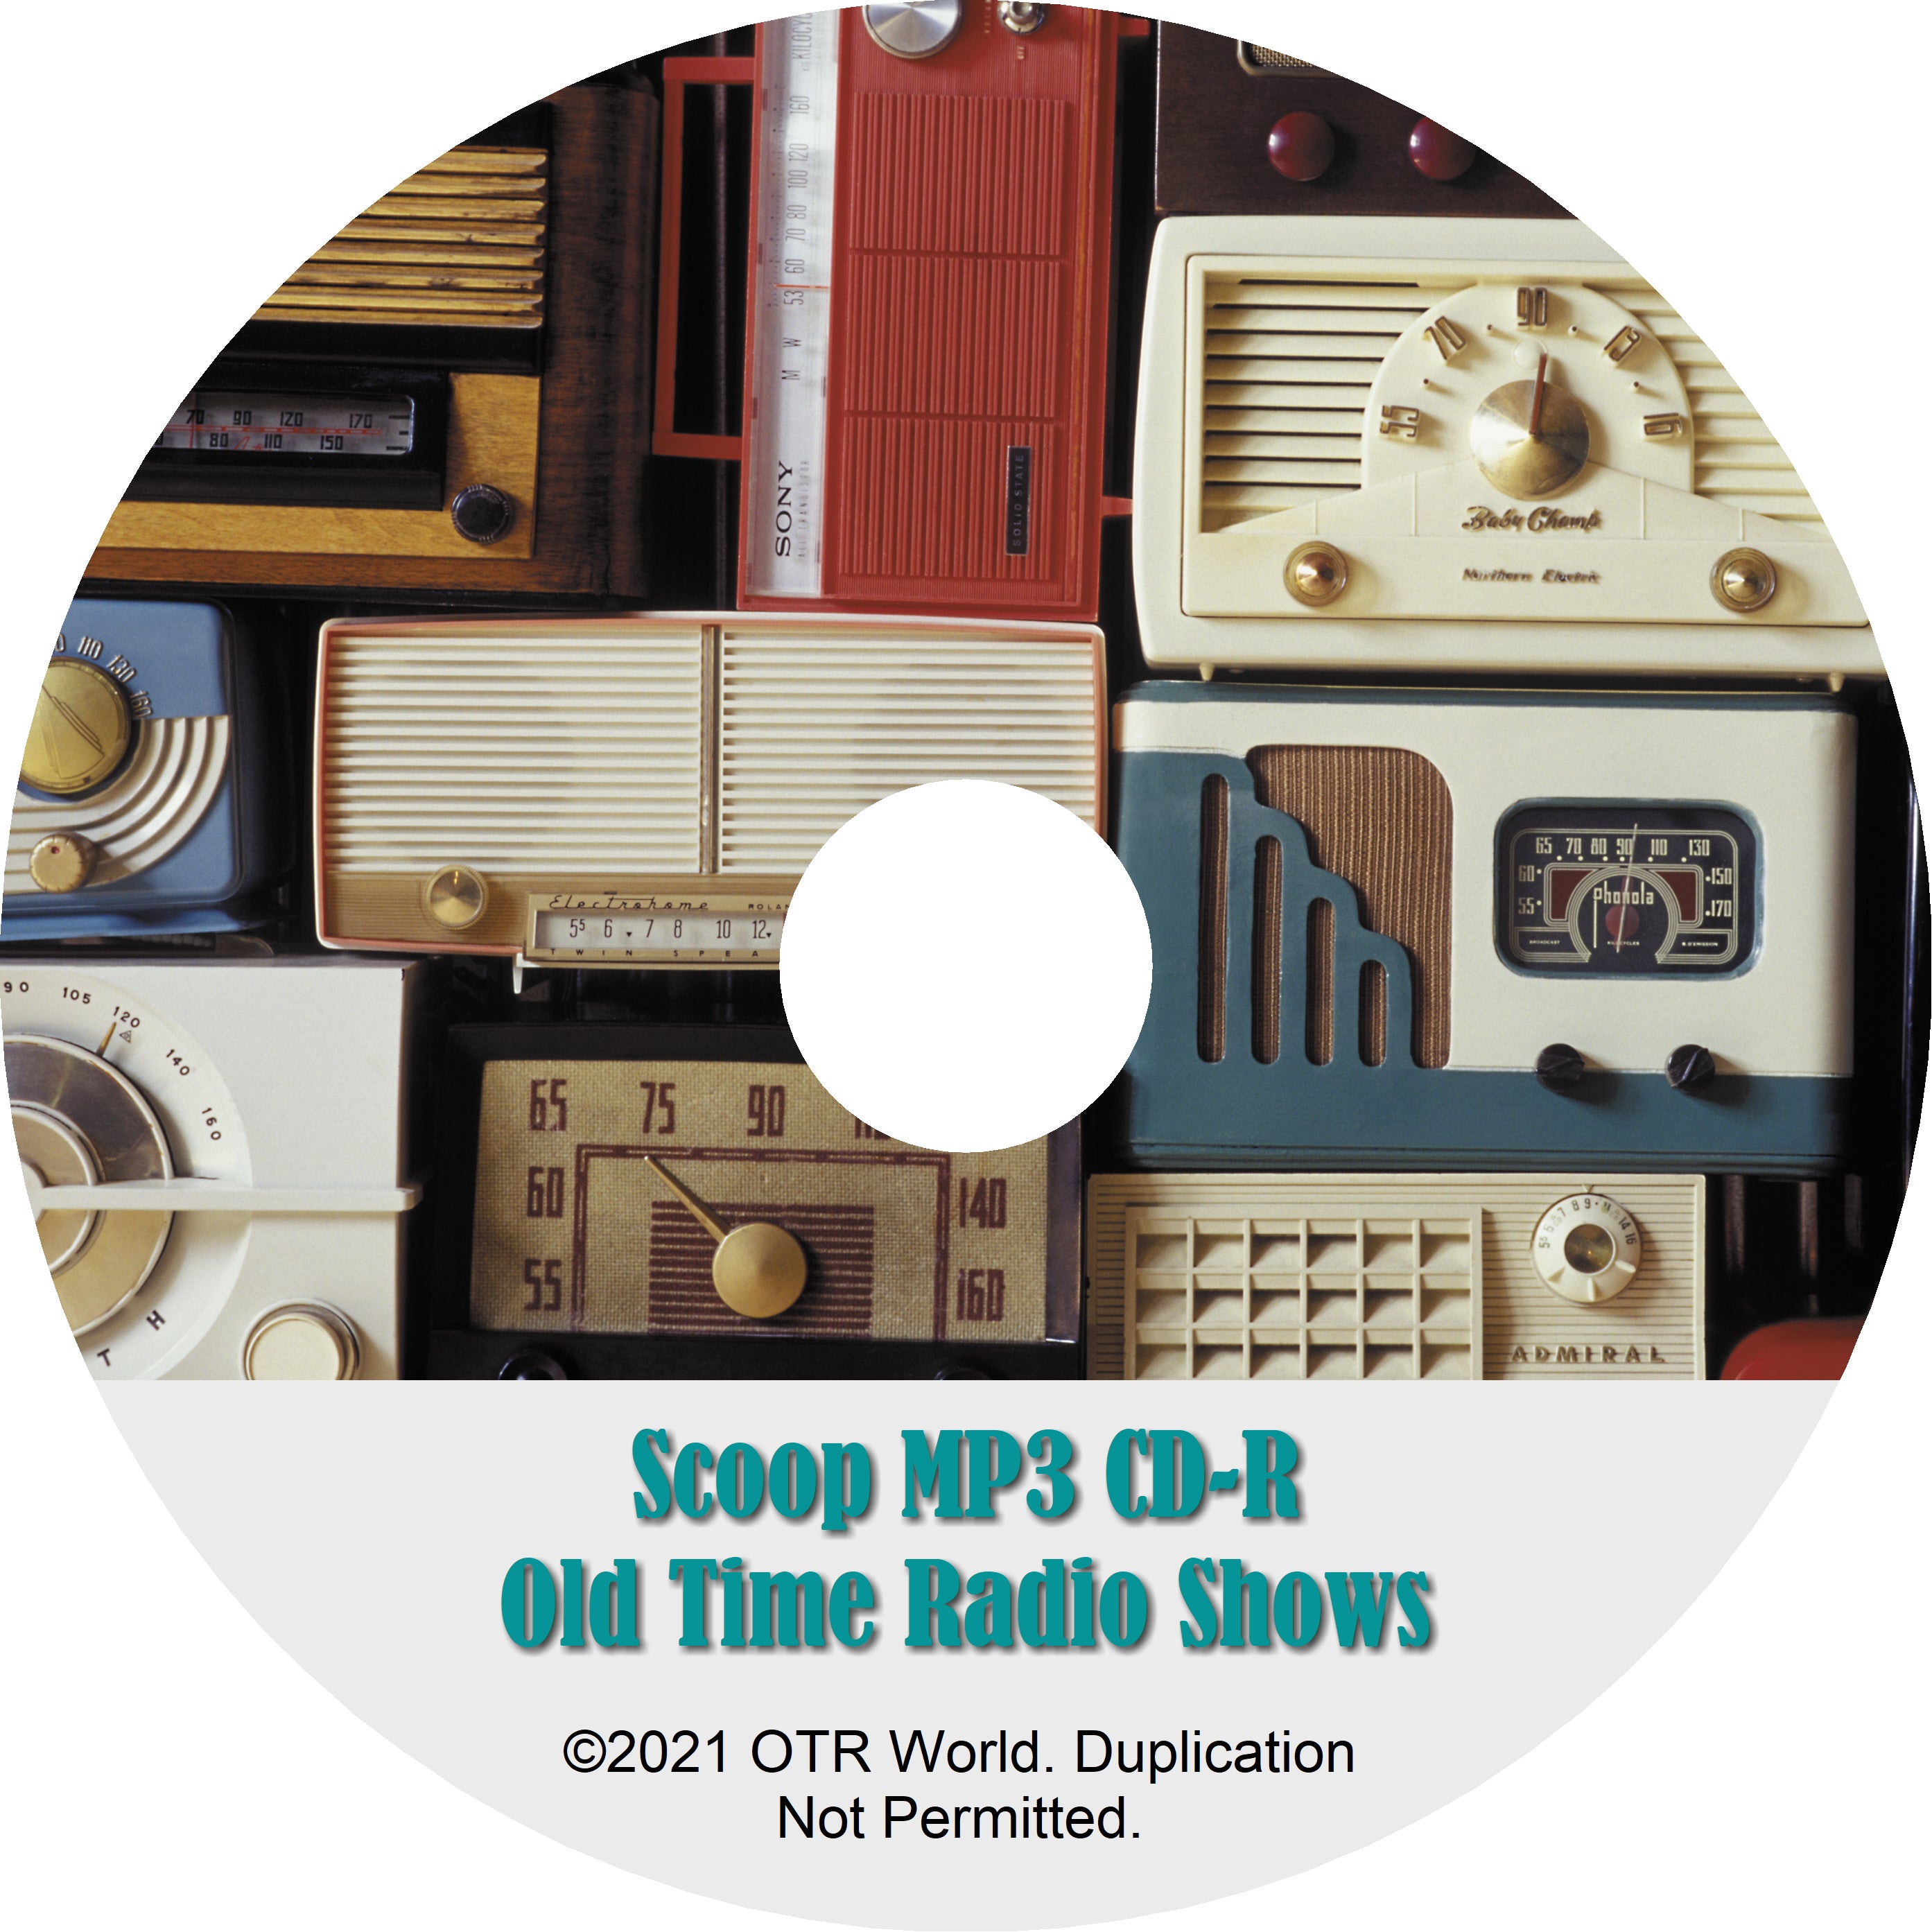 Scoop OTRS OTR Old Time Radio Shows MP3 On CD-R 29 Episodes